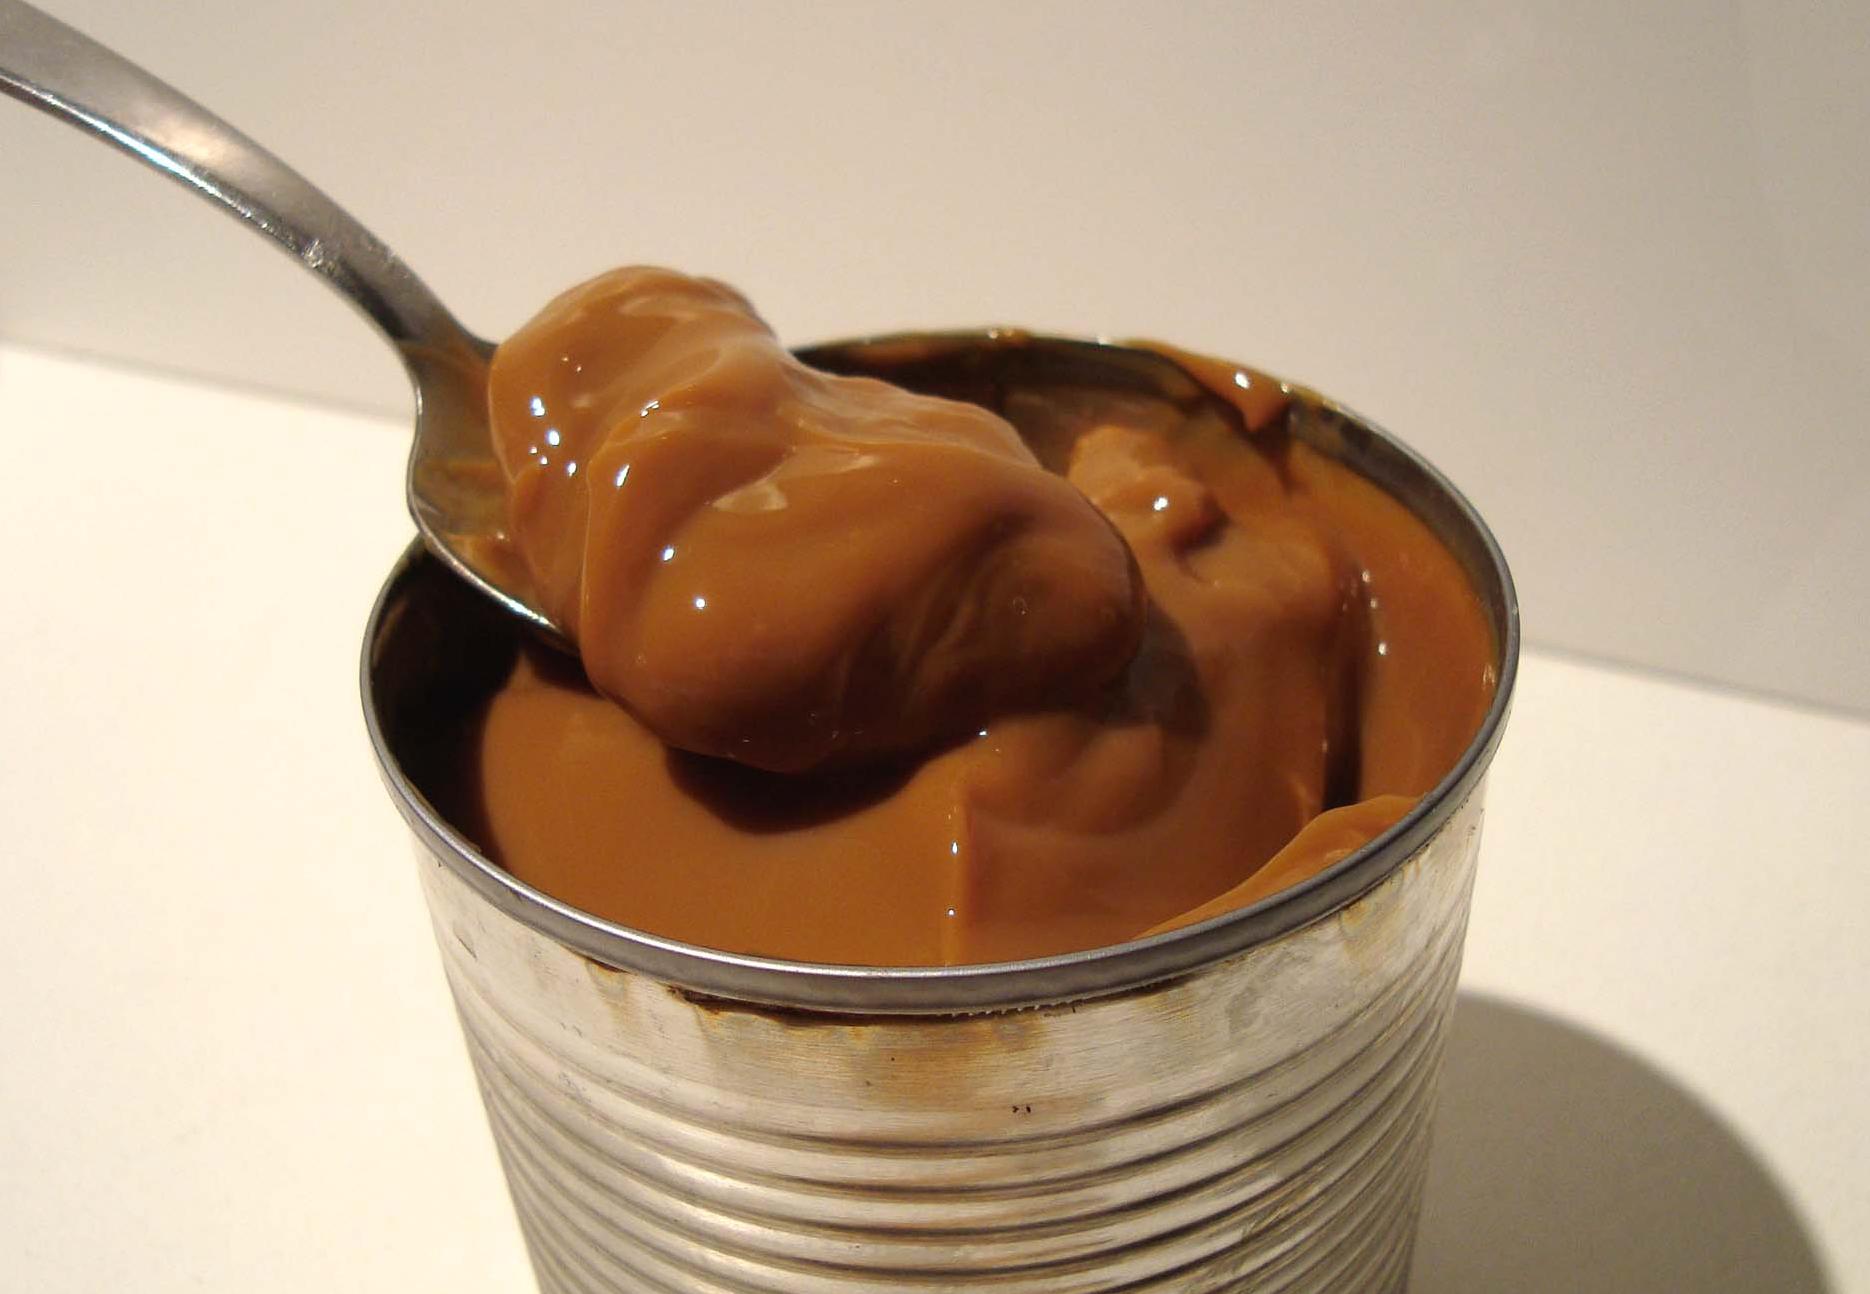  Golden brown in color, rich in flavor — pure heaven in a jar